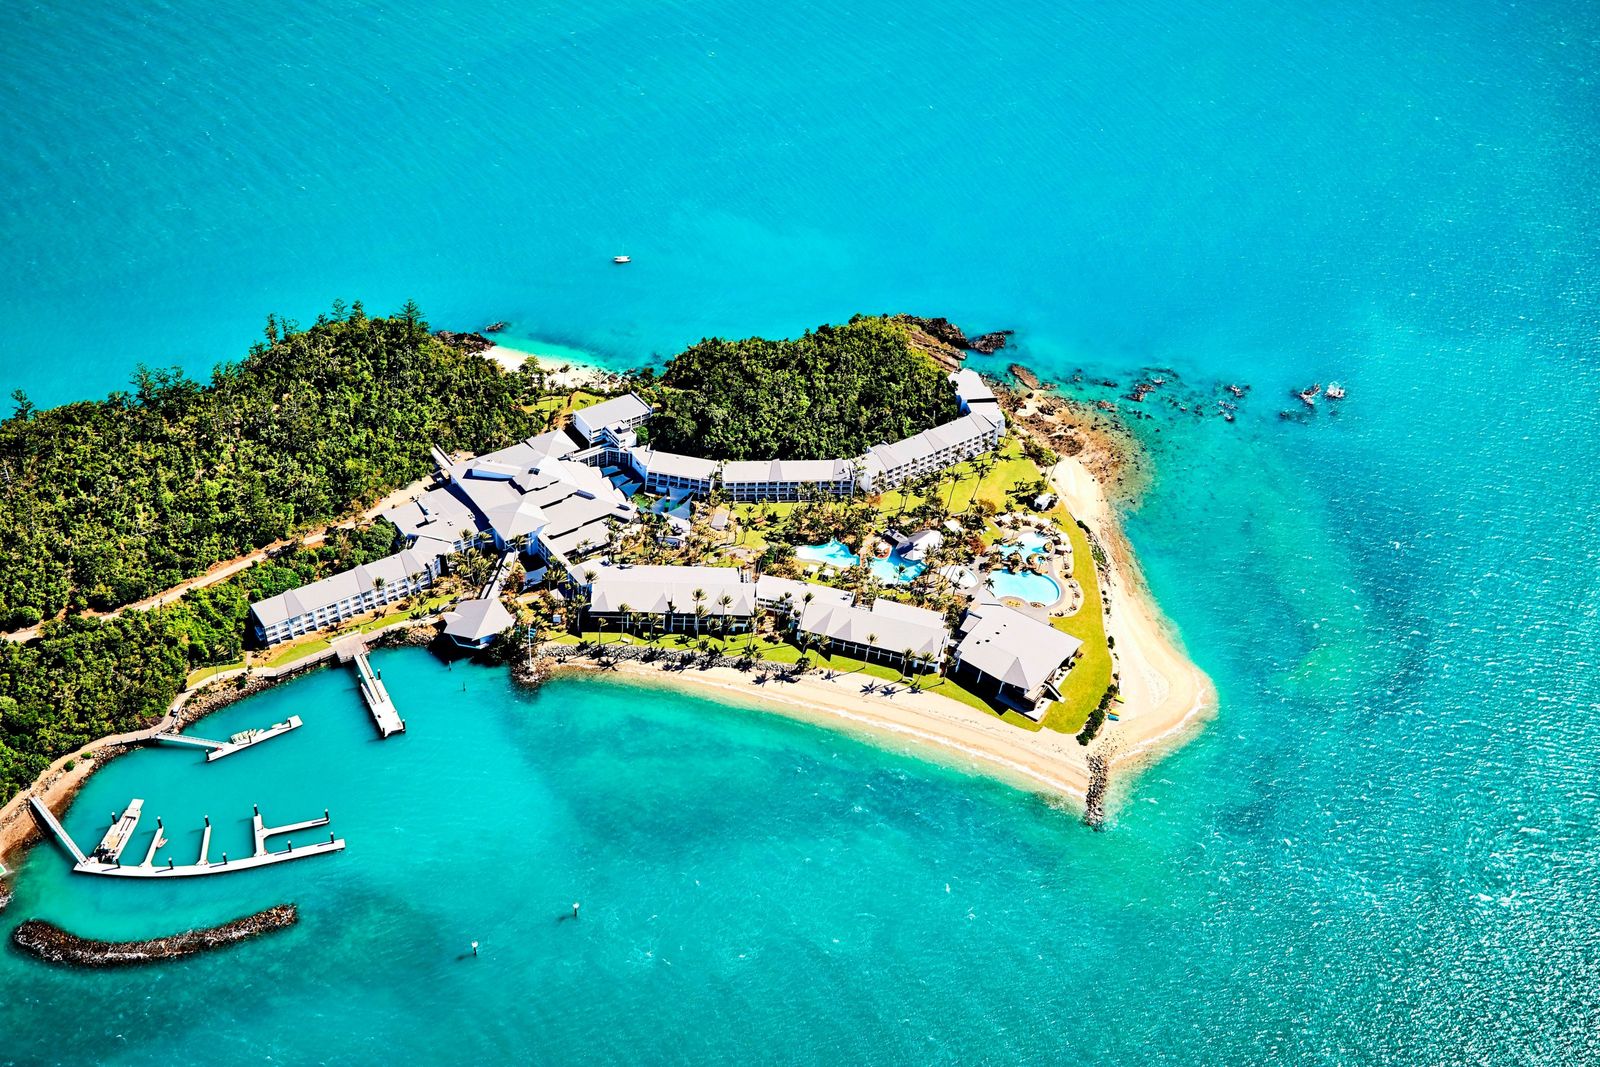 Breathtaking drone view of Daydream Island Resort.